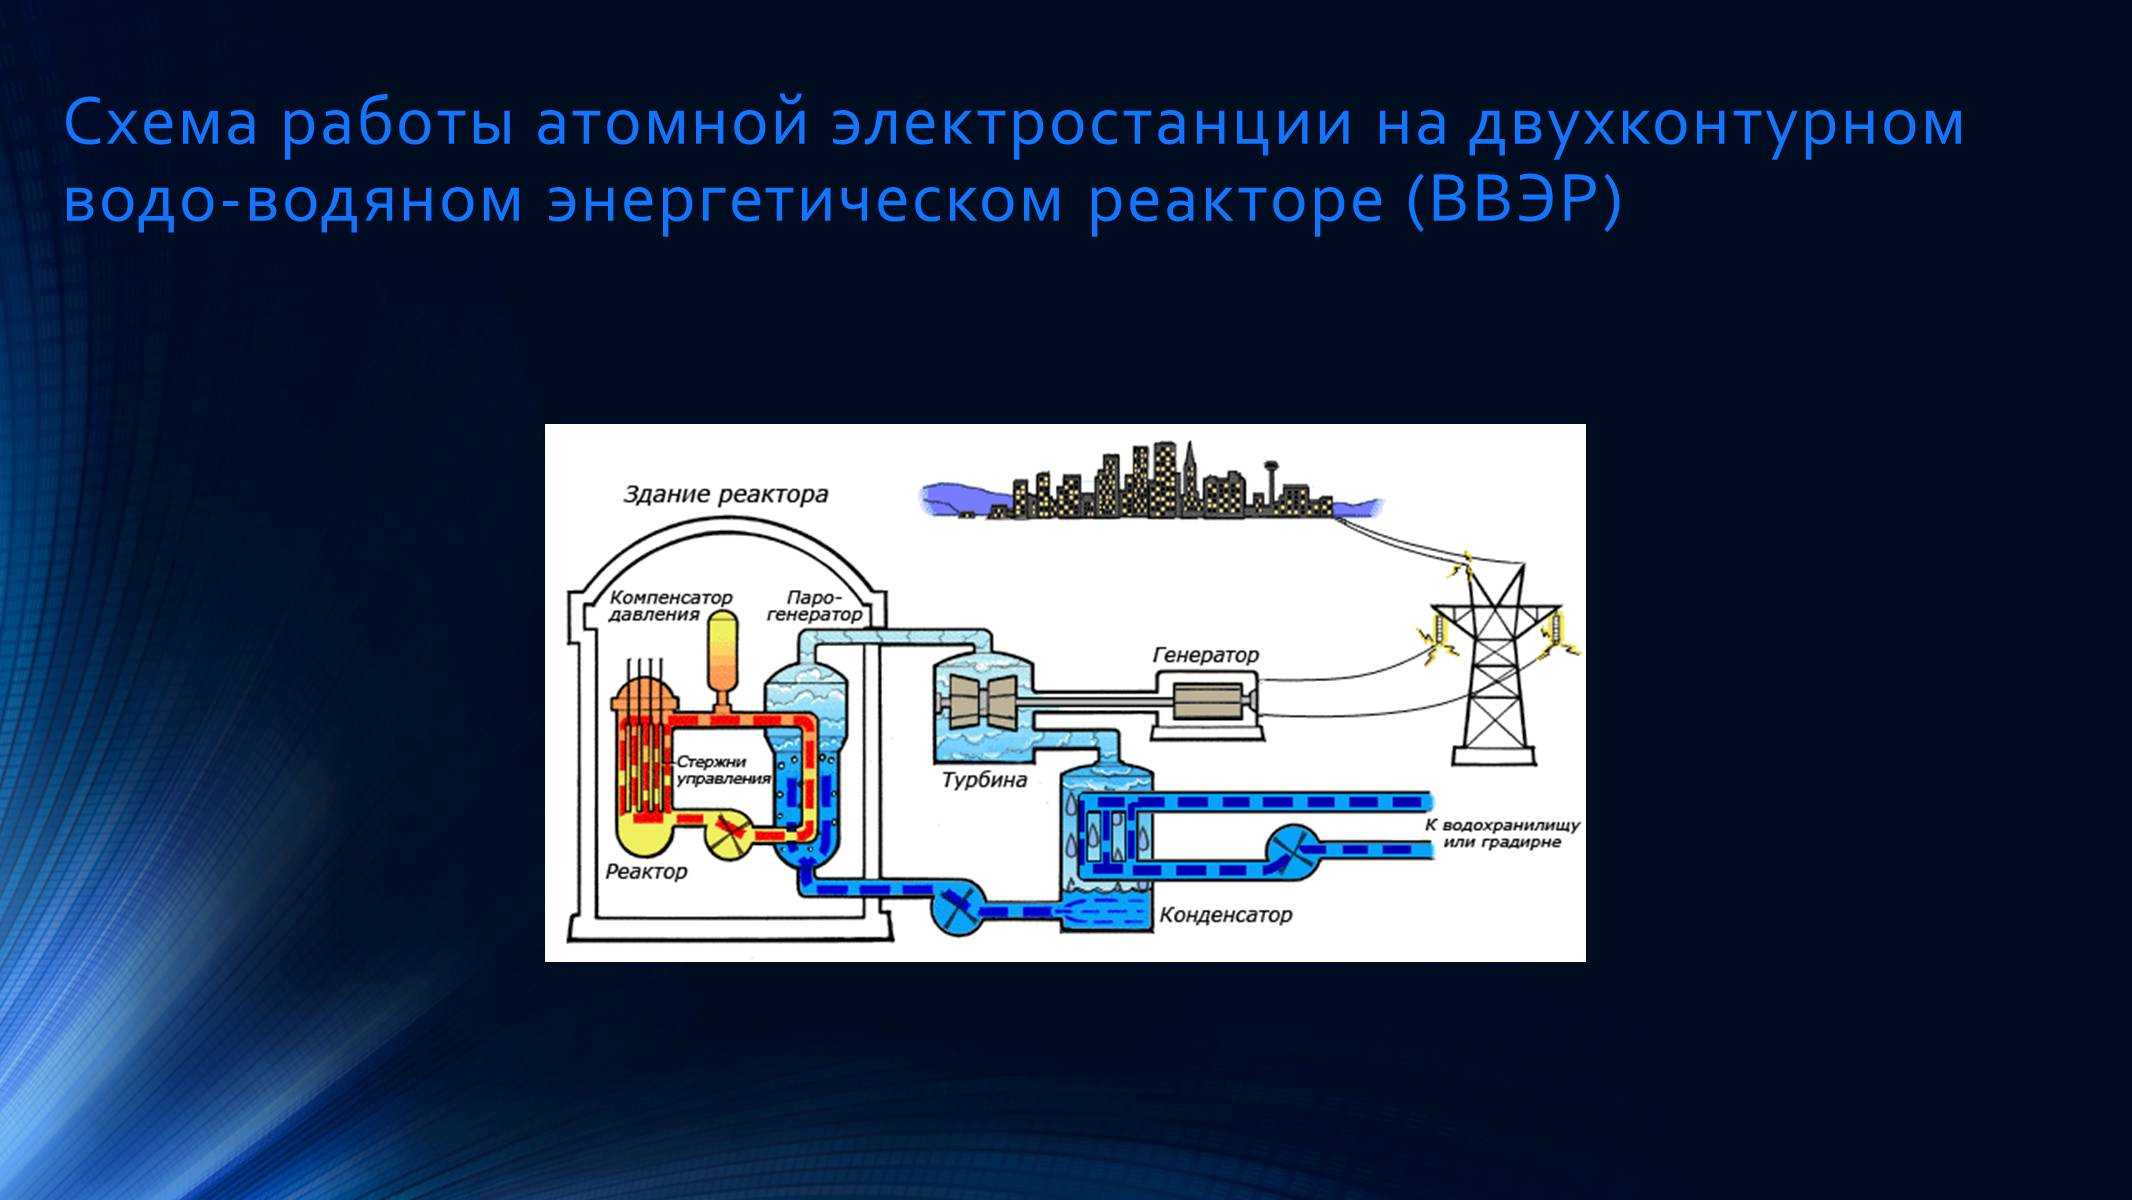 Ядерный реактор презентация. Атомная электростанция реактор схема. Схема работы АЭС С ВВЭР. Энергетический ядерный реактор схема. Принцип работы АЭС по схеме.